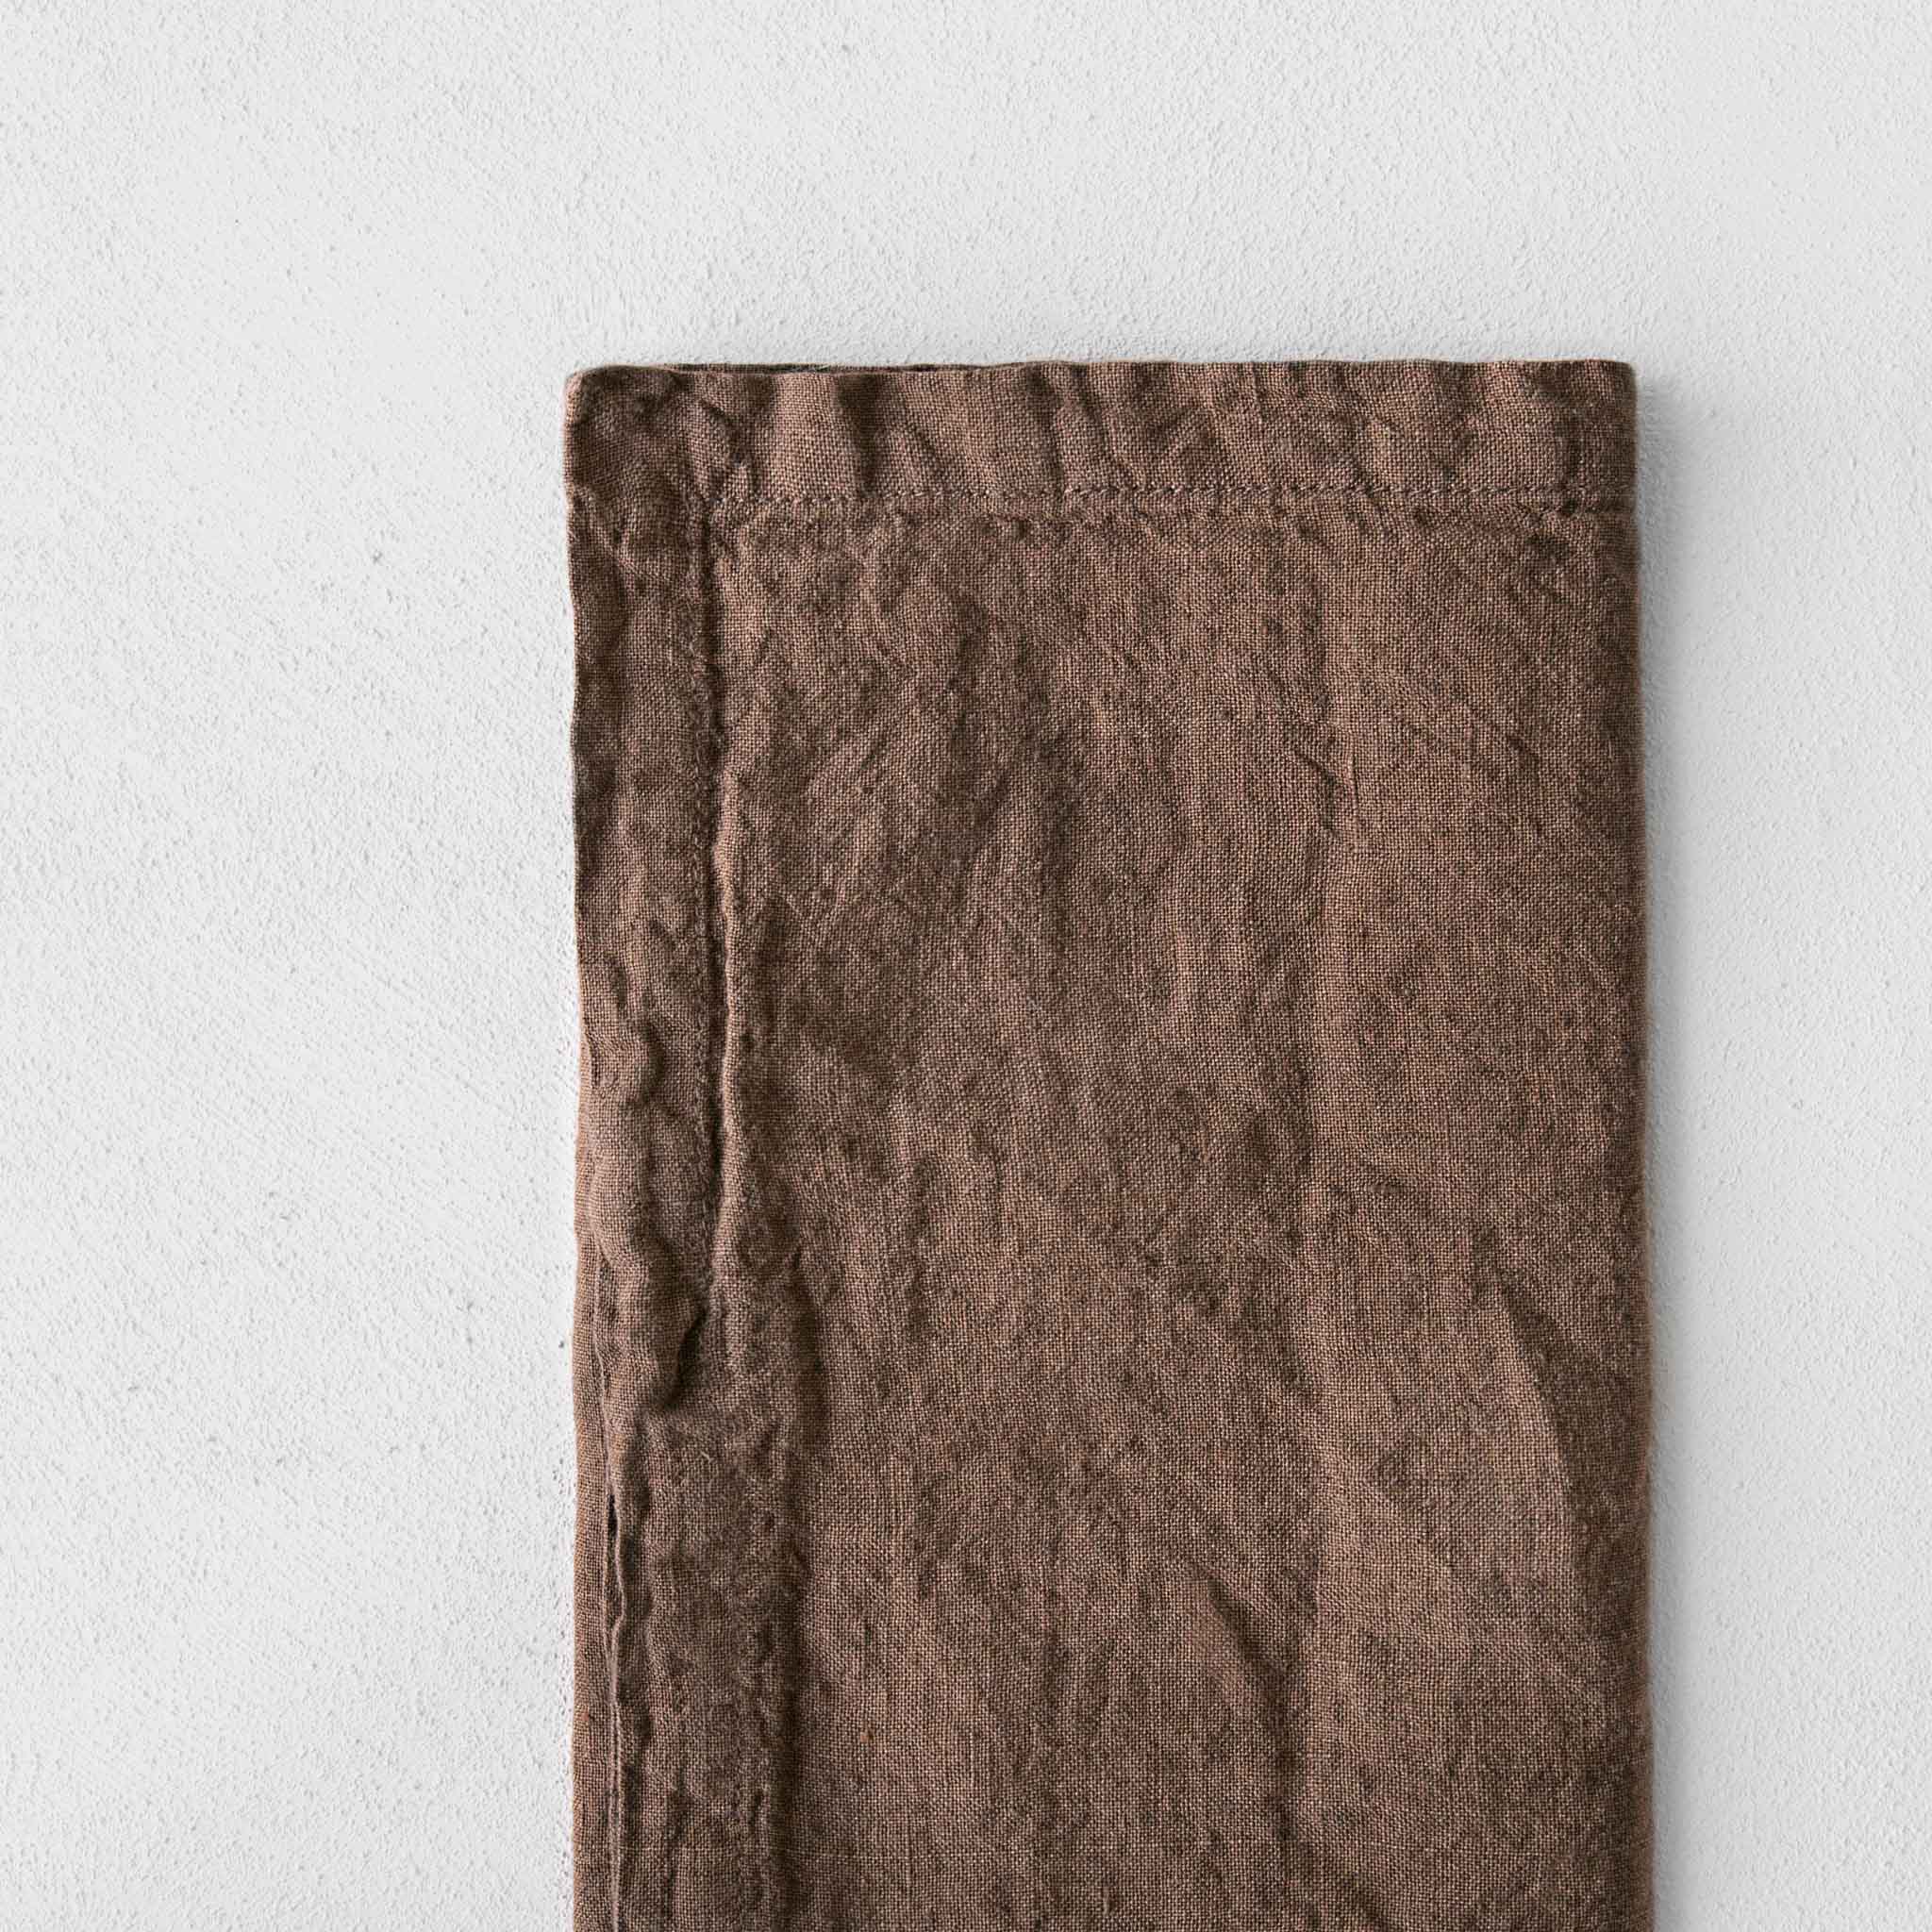  Linen Napkins | Chocolate Brown  | Hale Mercantile Co.